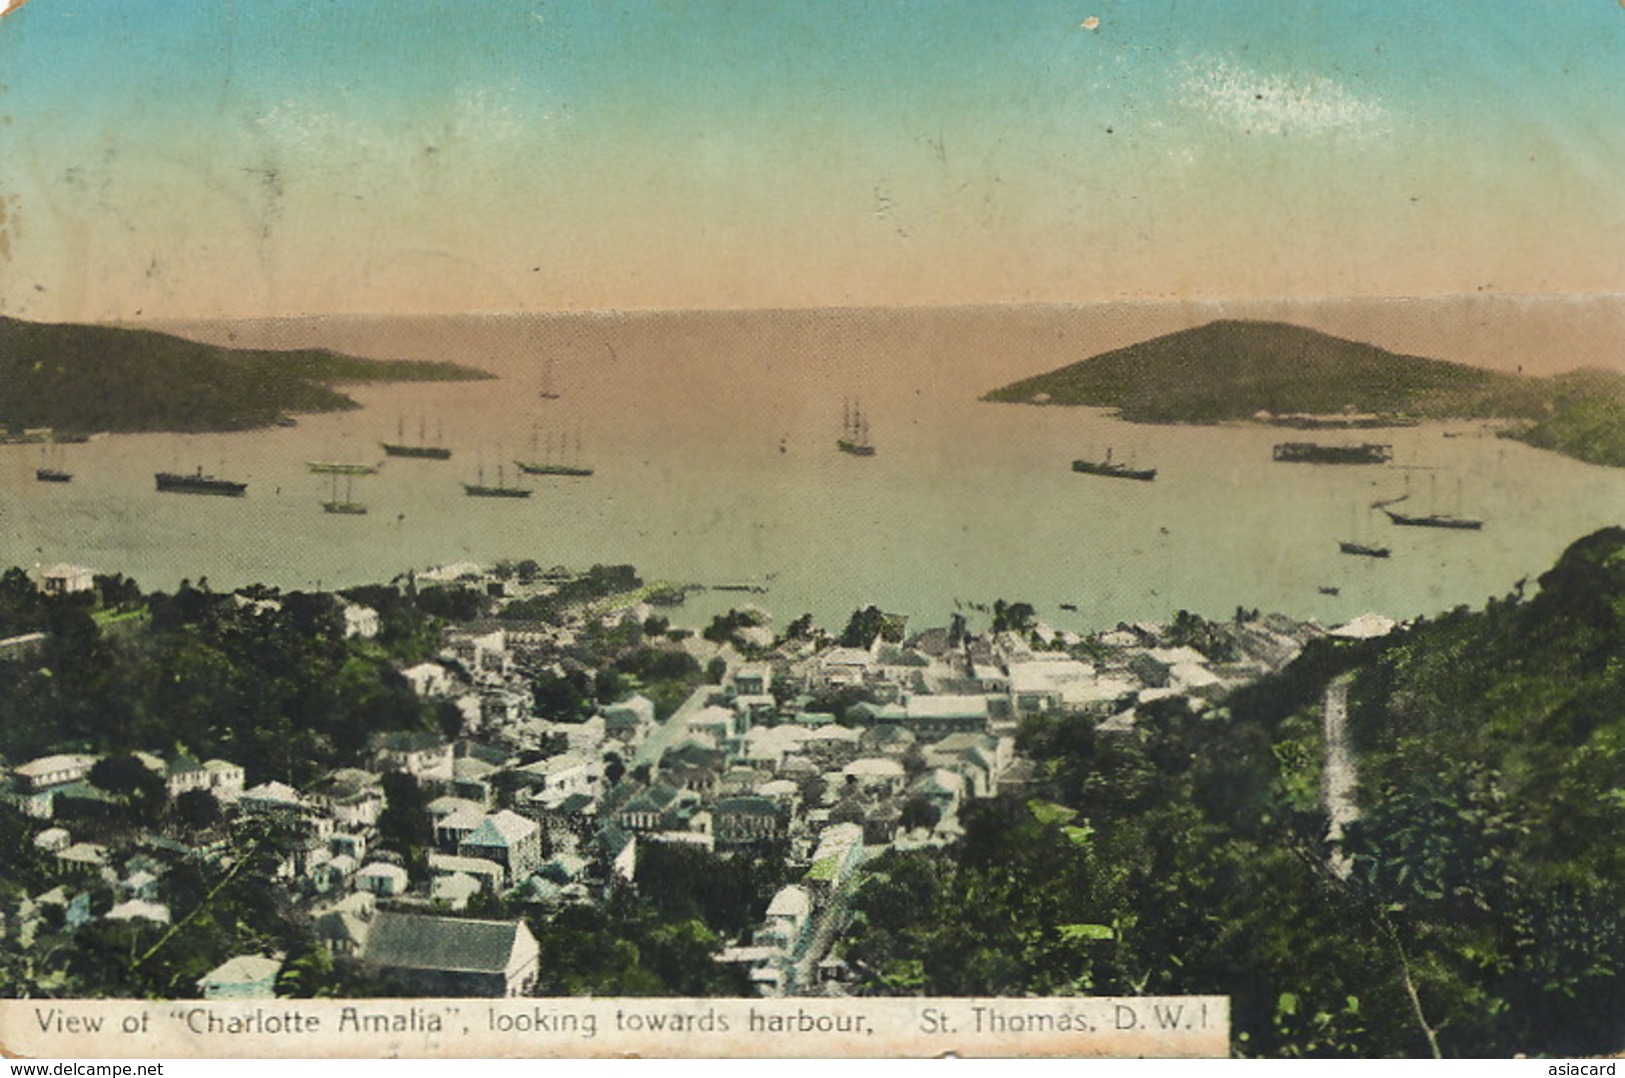 View Of " Charlotte Amalia " Looking Towards Harbour St Thomas D.W.I. Taylor P. Used To Jacmel Haiti 1912 - Amerikaanse Maagdeneilanden